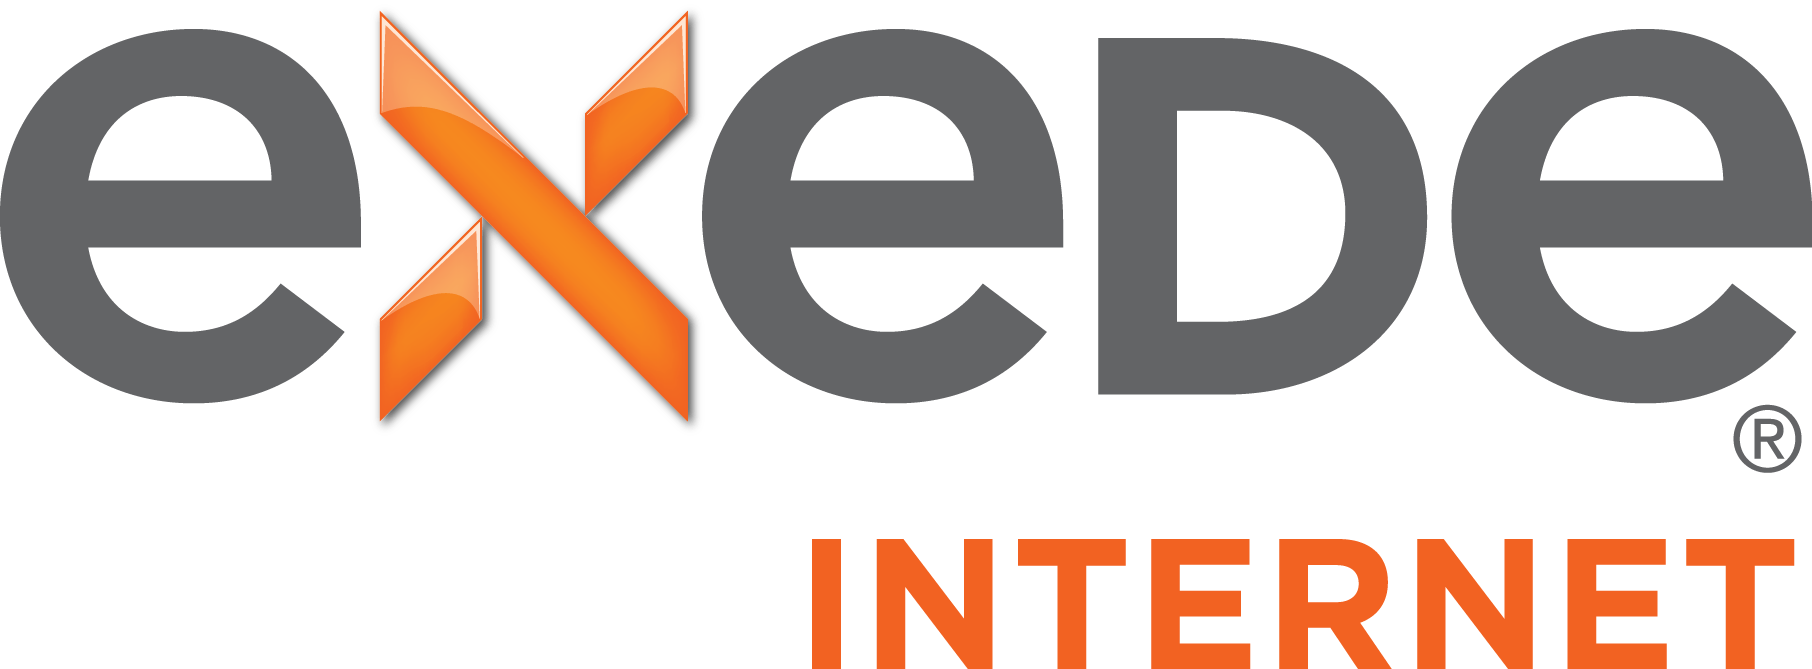 Ex Logo - Ex Internet Logo Main 3D LG.png